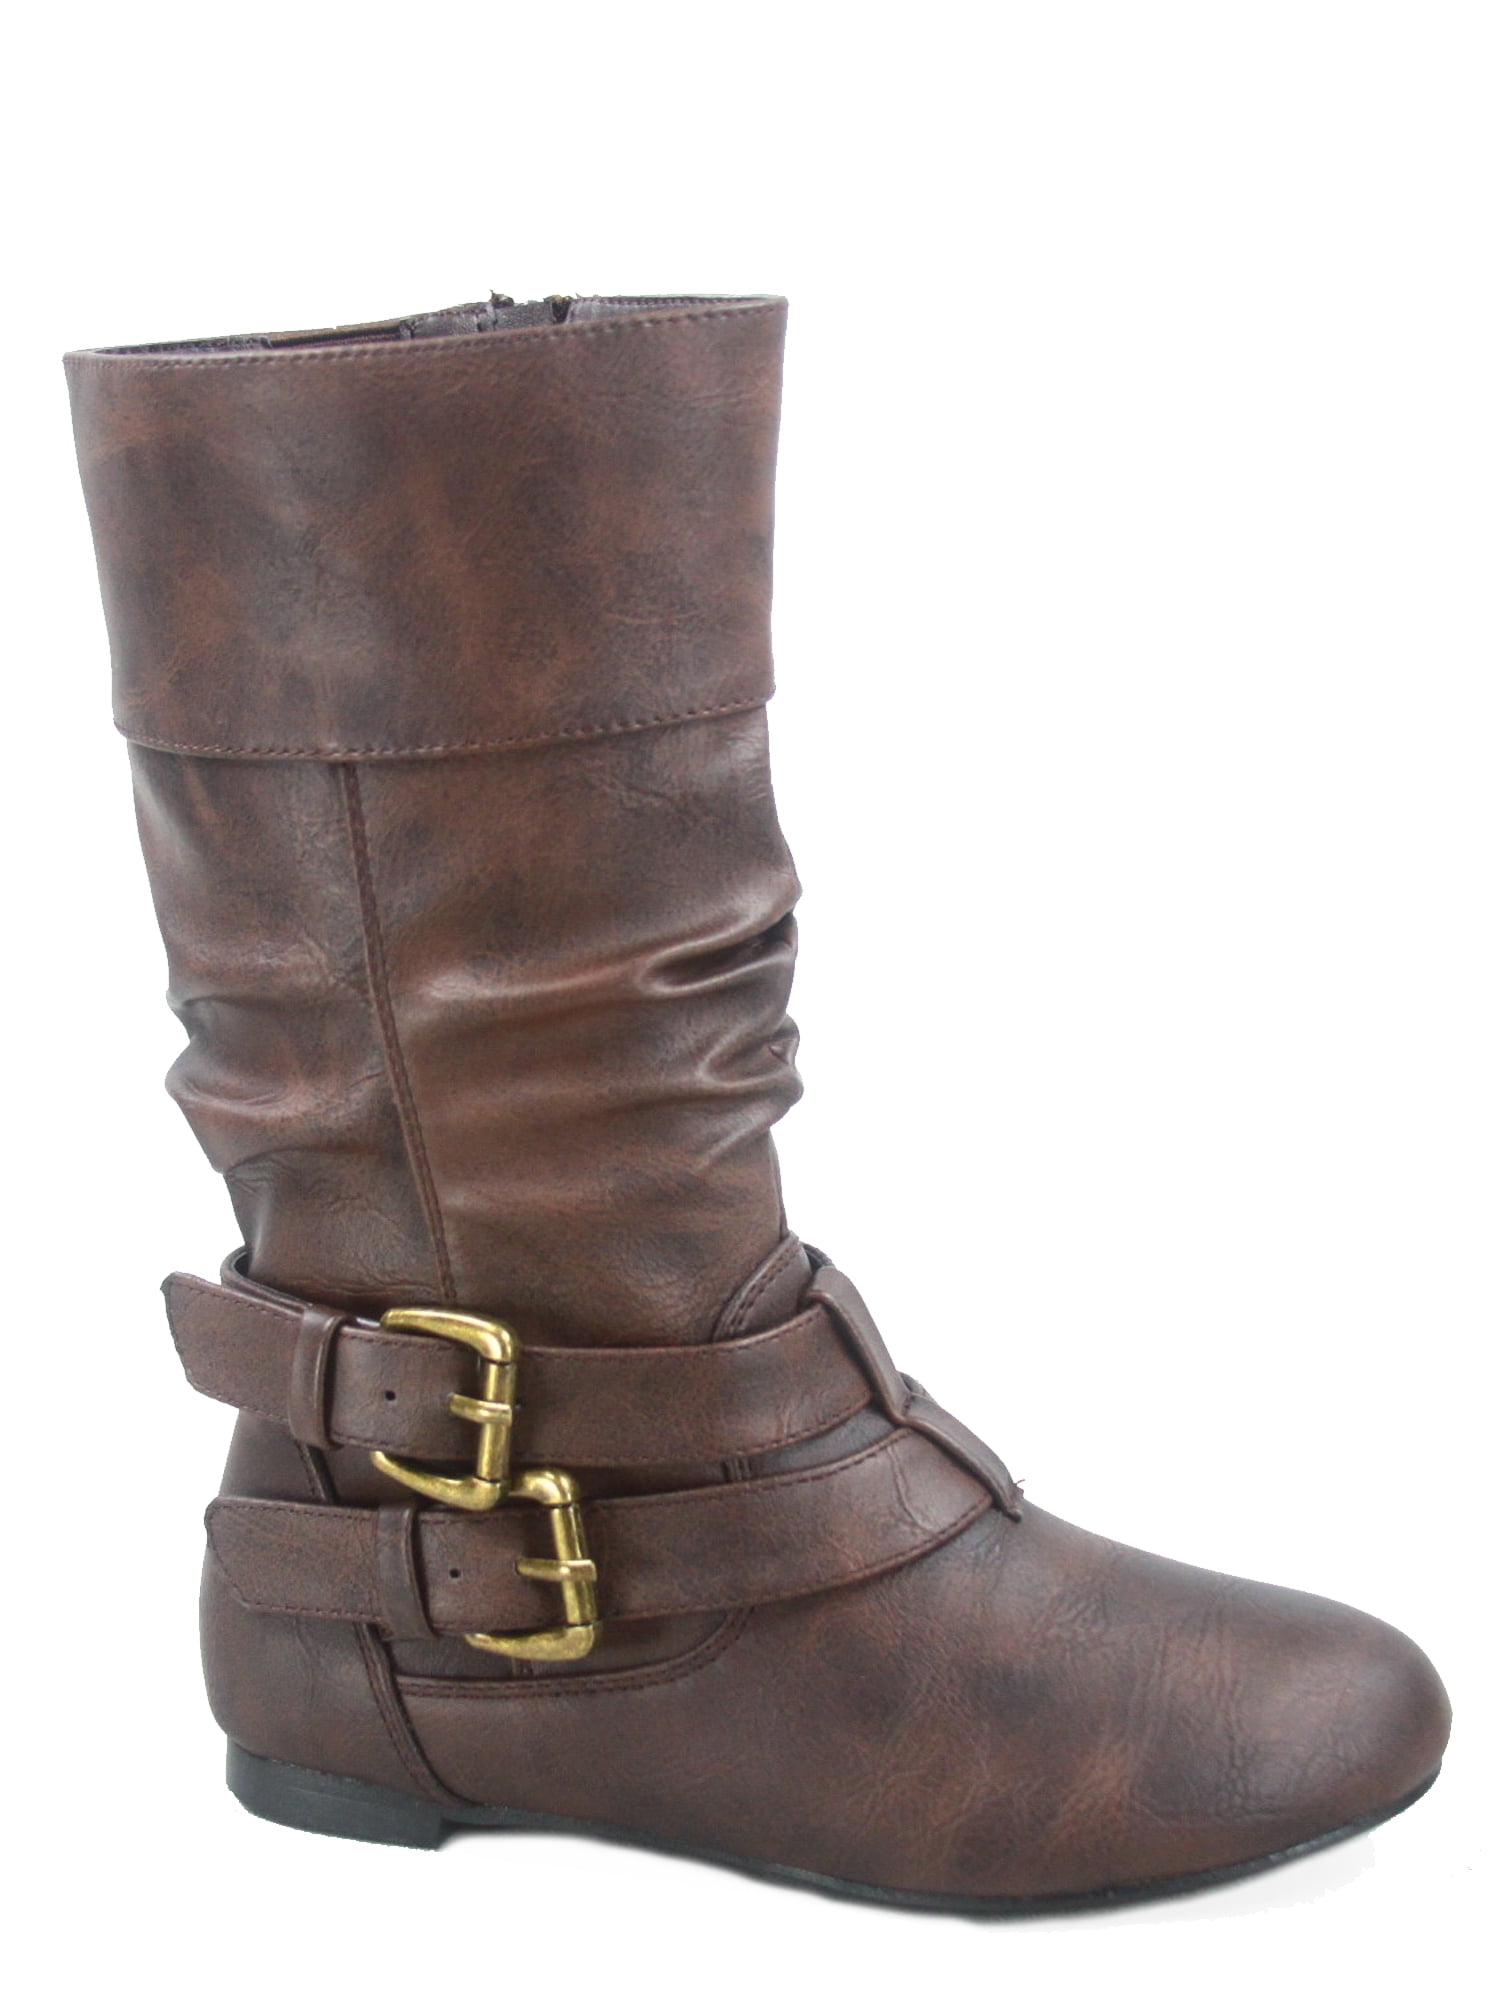 Details about   Womens Cowboy Knee High Mid Calf Boots Zipper Low Block Heel Buckle Flat Shoes D 